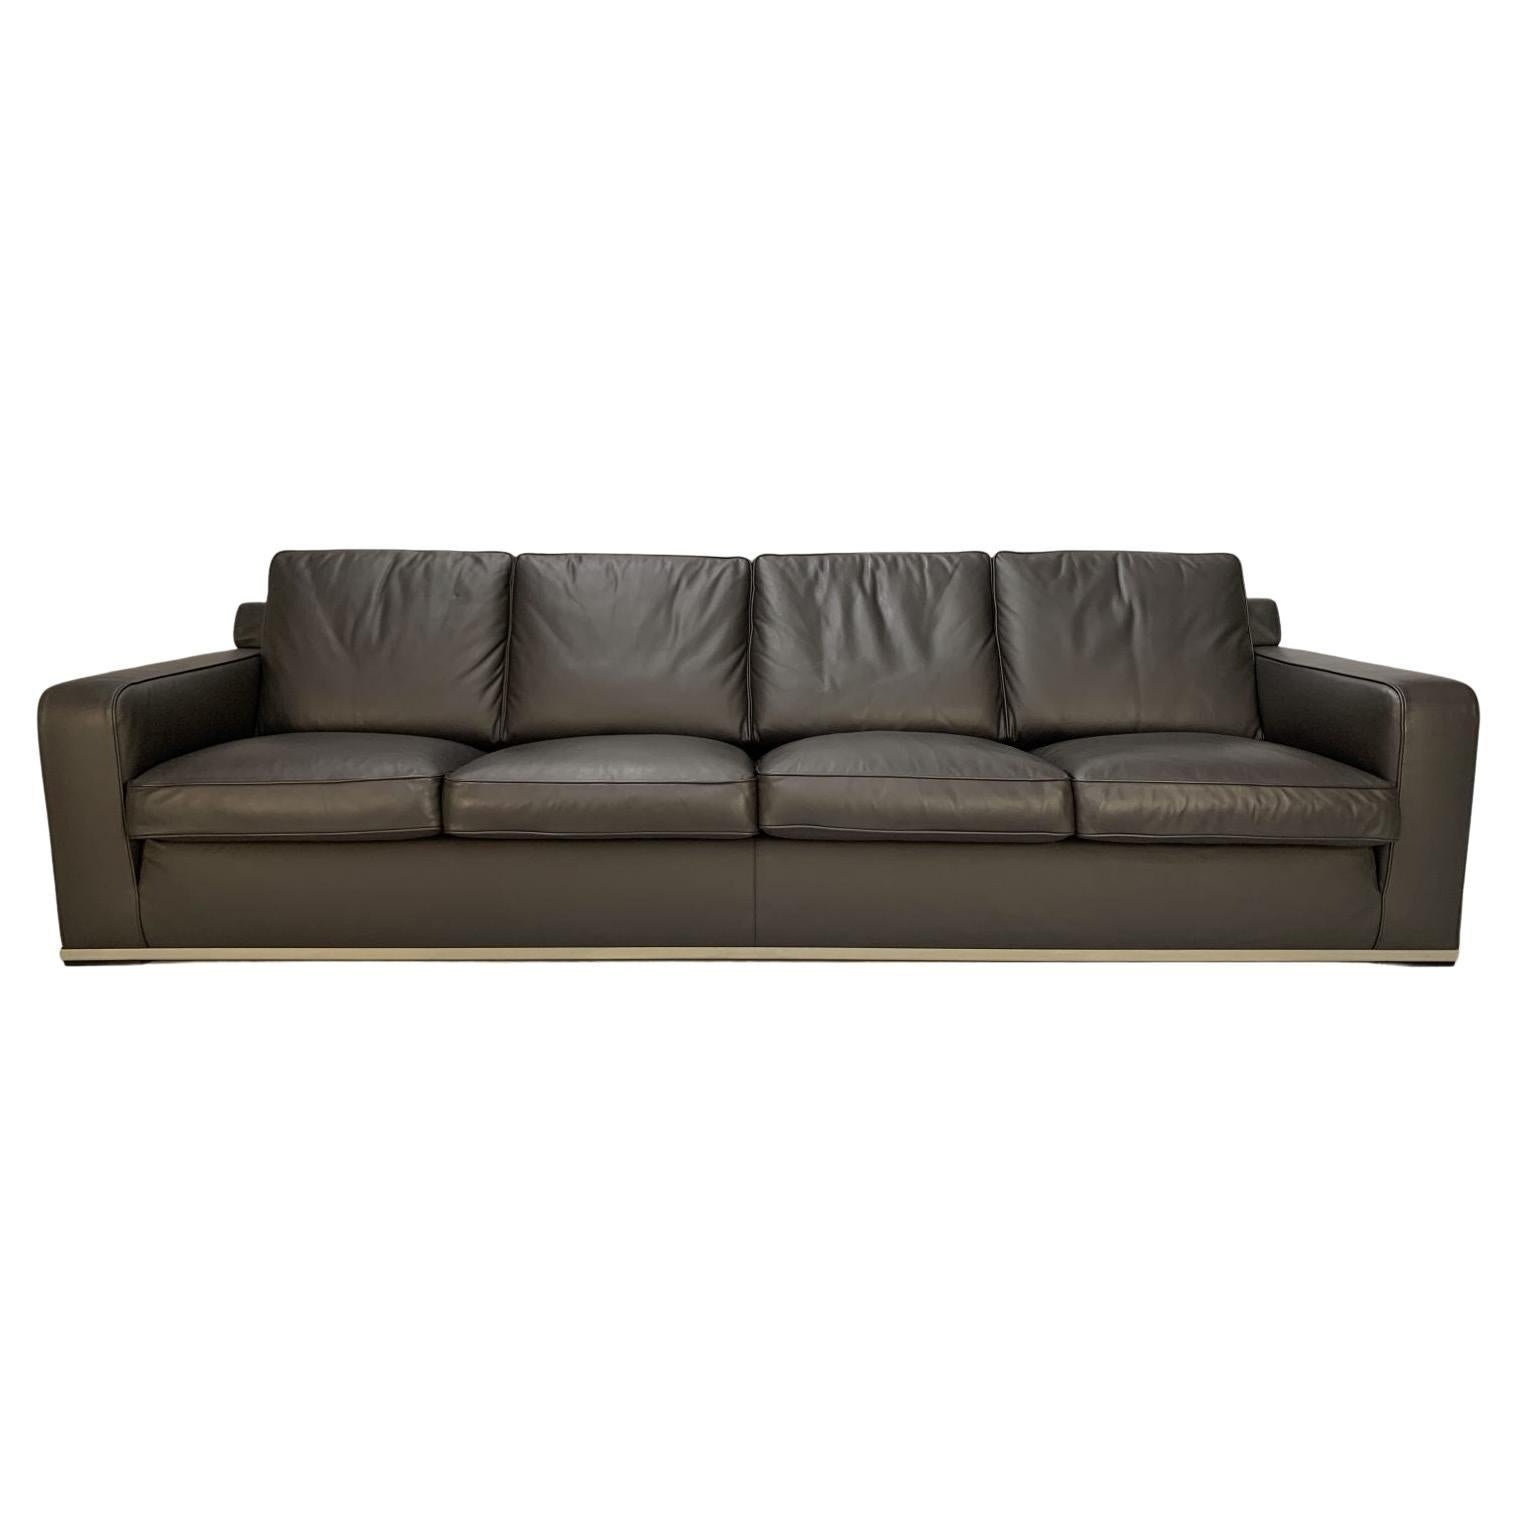 B&B Italia “Imprimateur Apta” 4-Seat Sofa in Dark Grey “Gamma” Leather